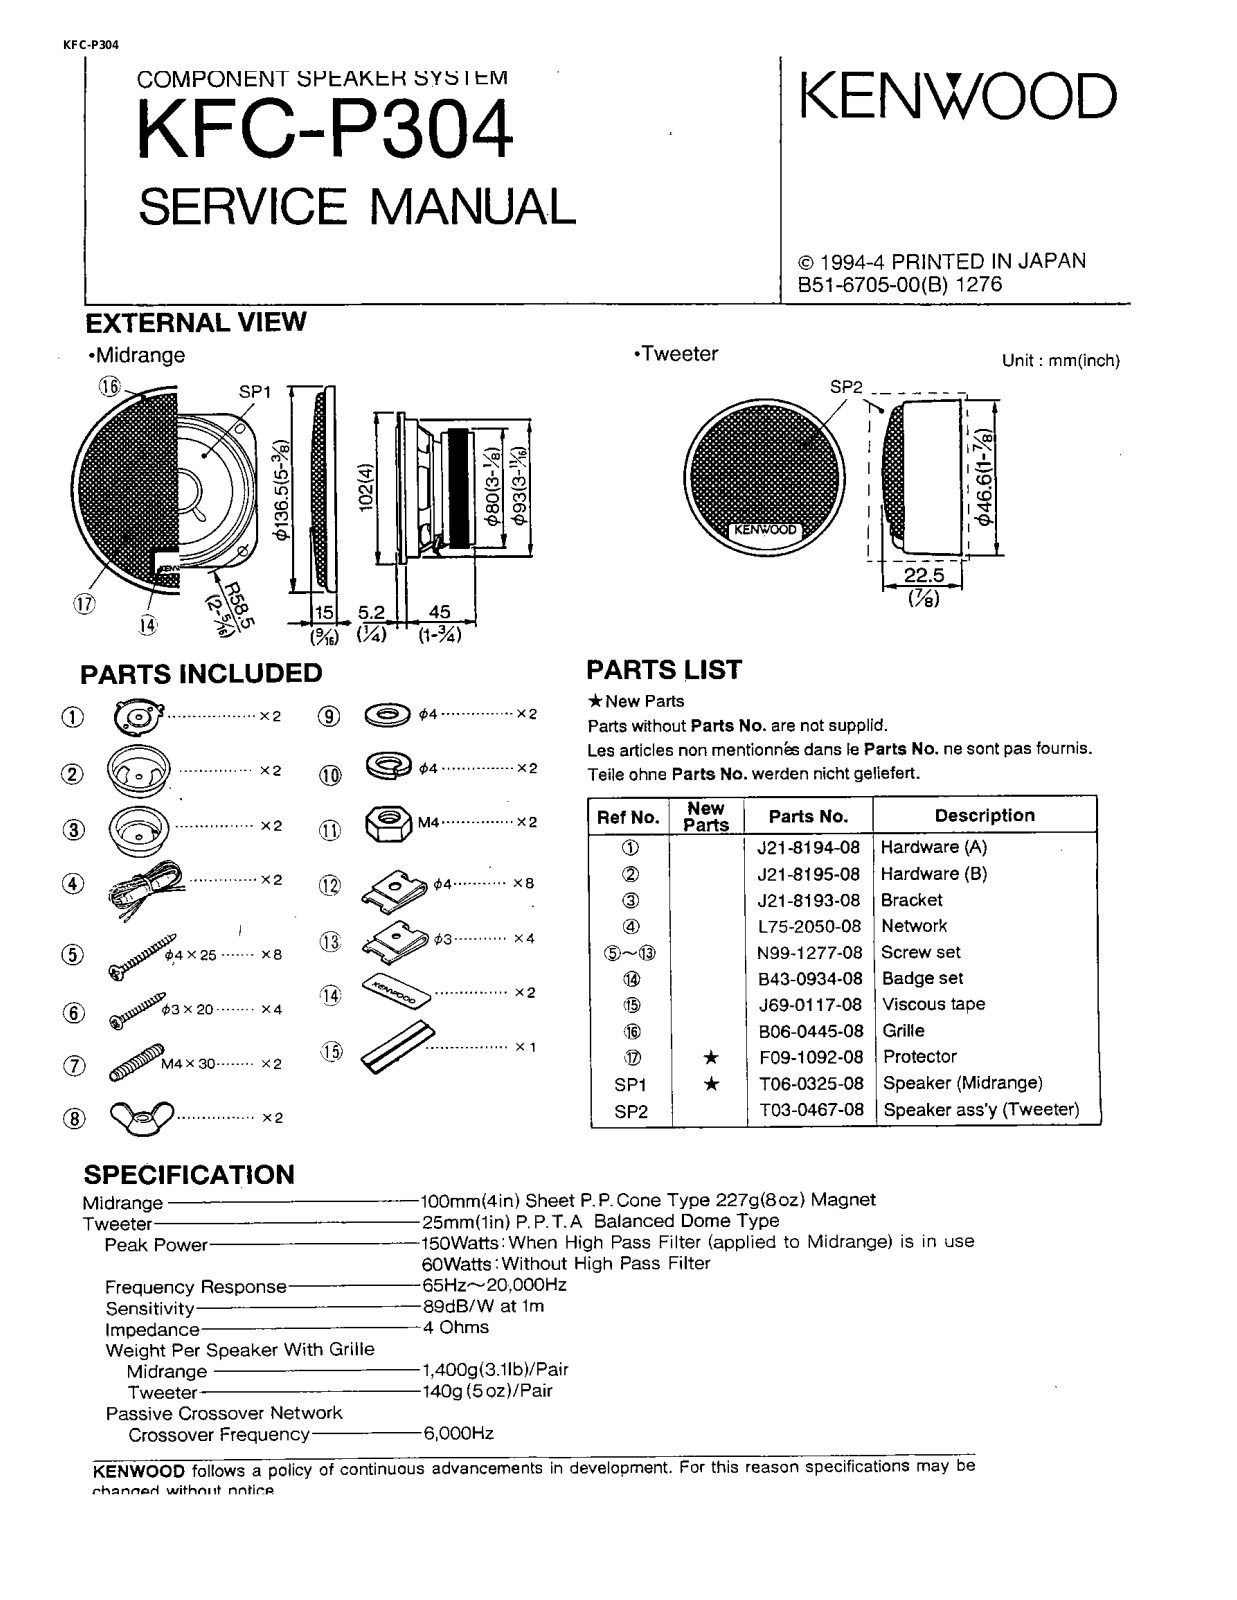 Kenwood KFC-P304 Service Manual